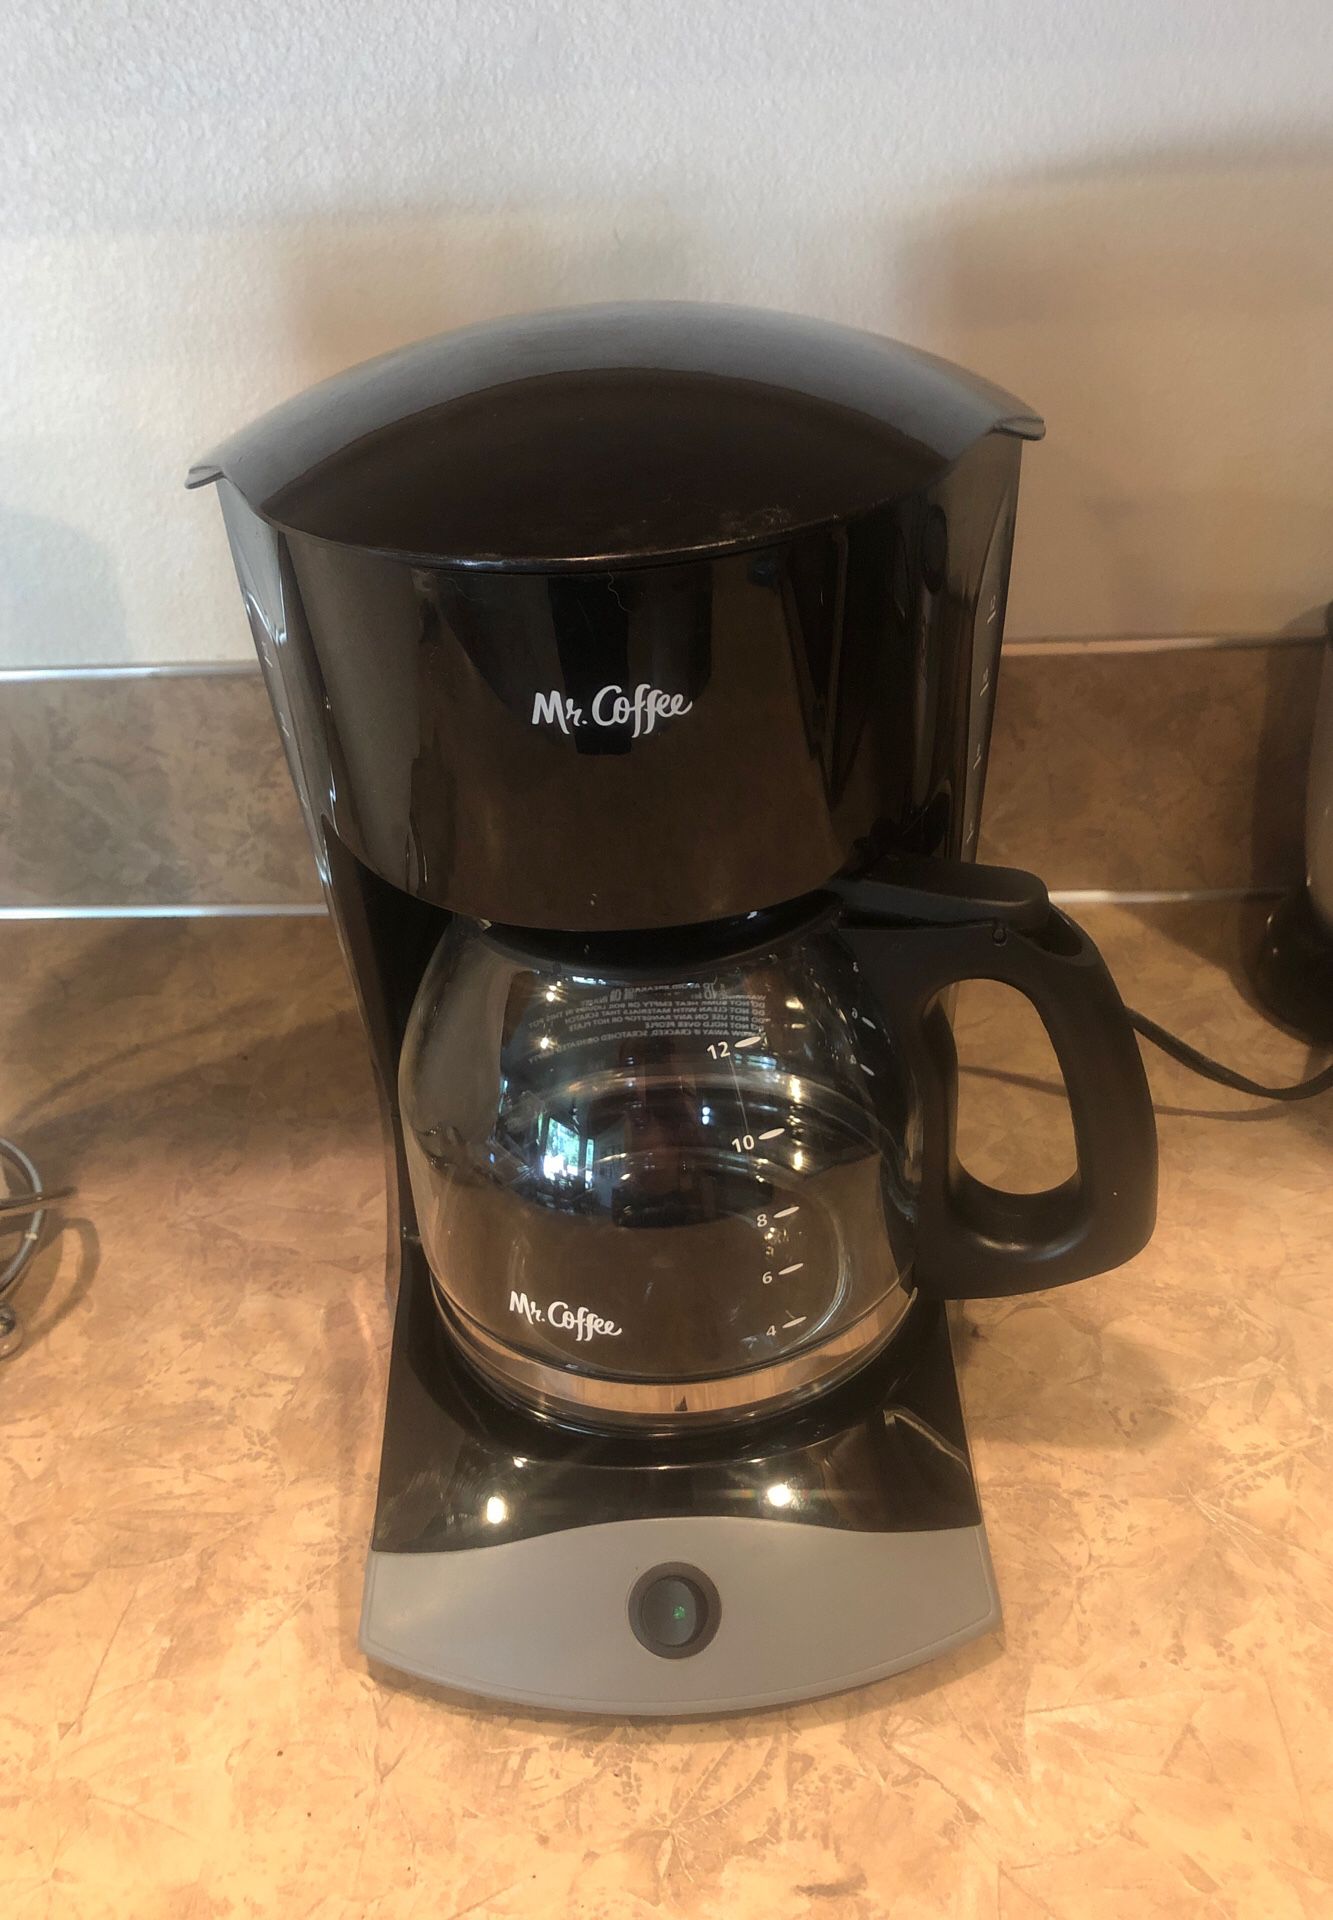 Me coffee drip coffee maker